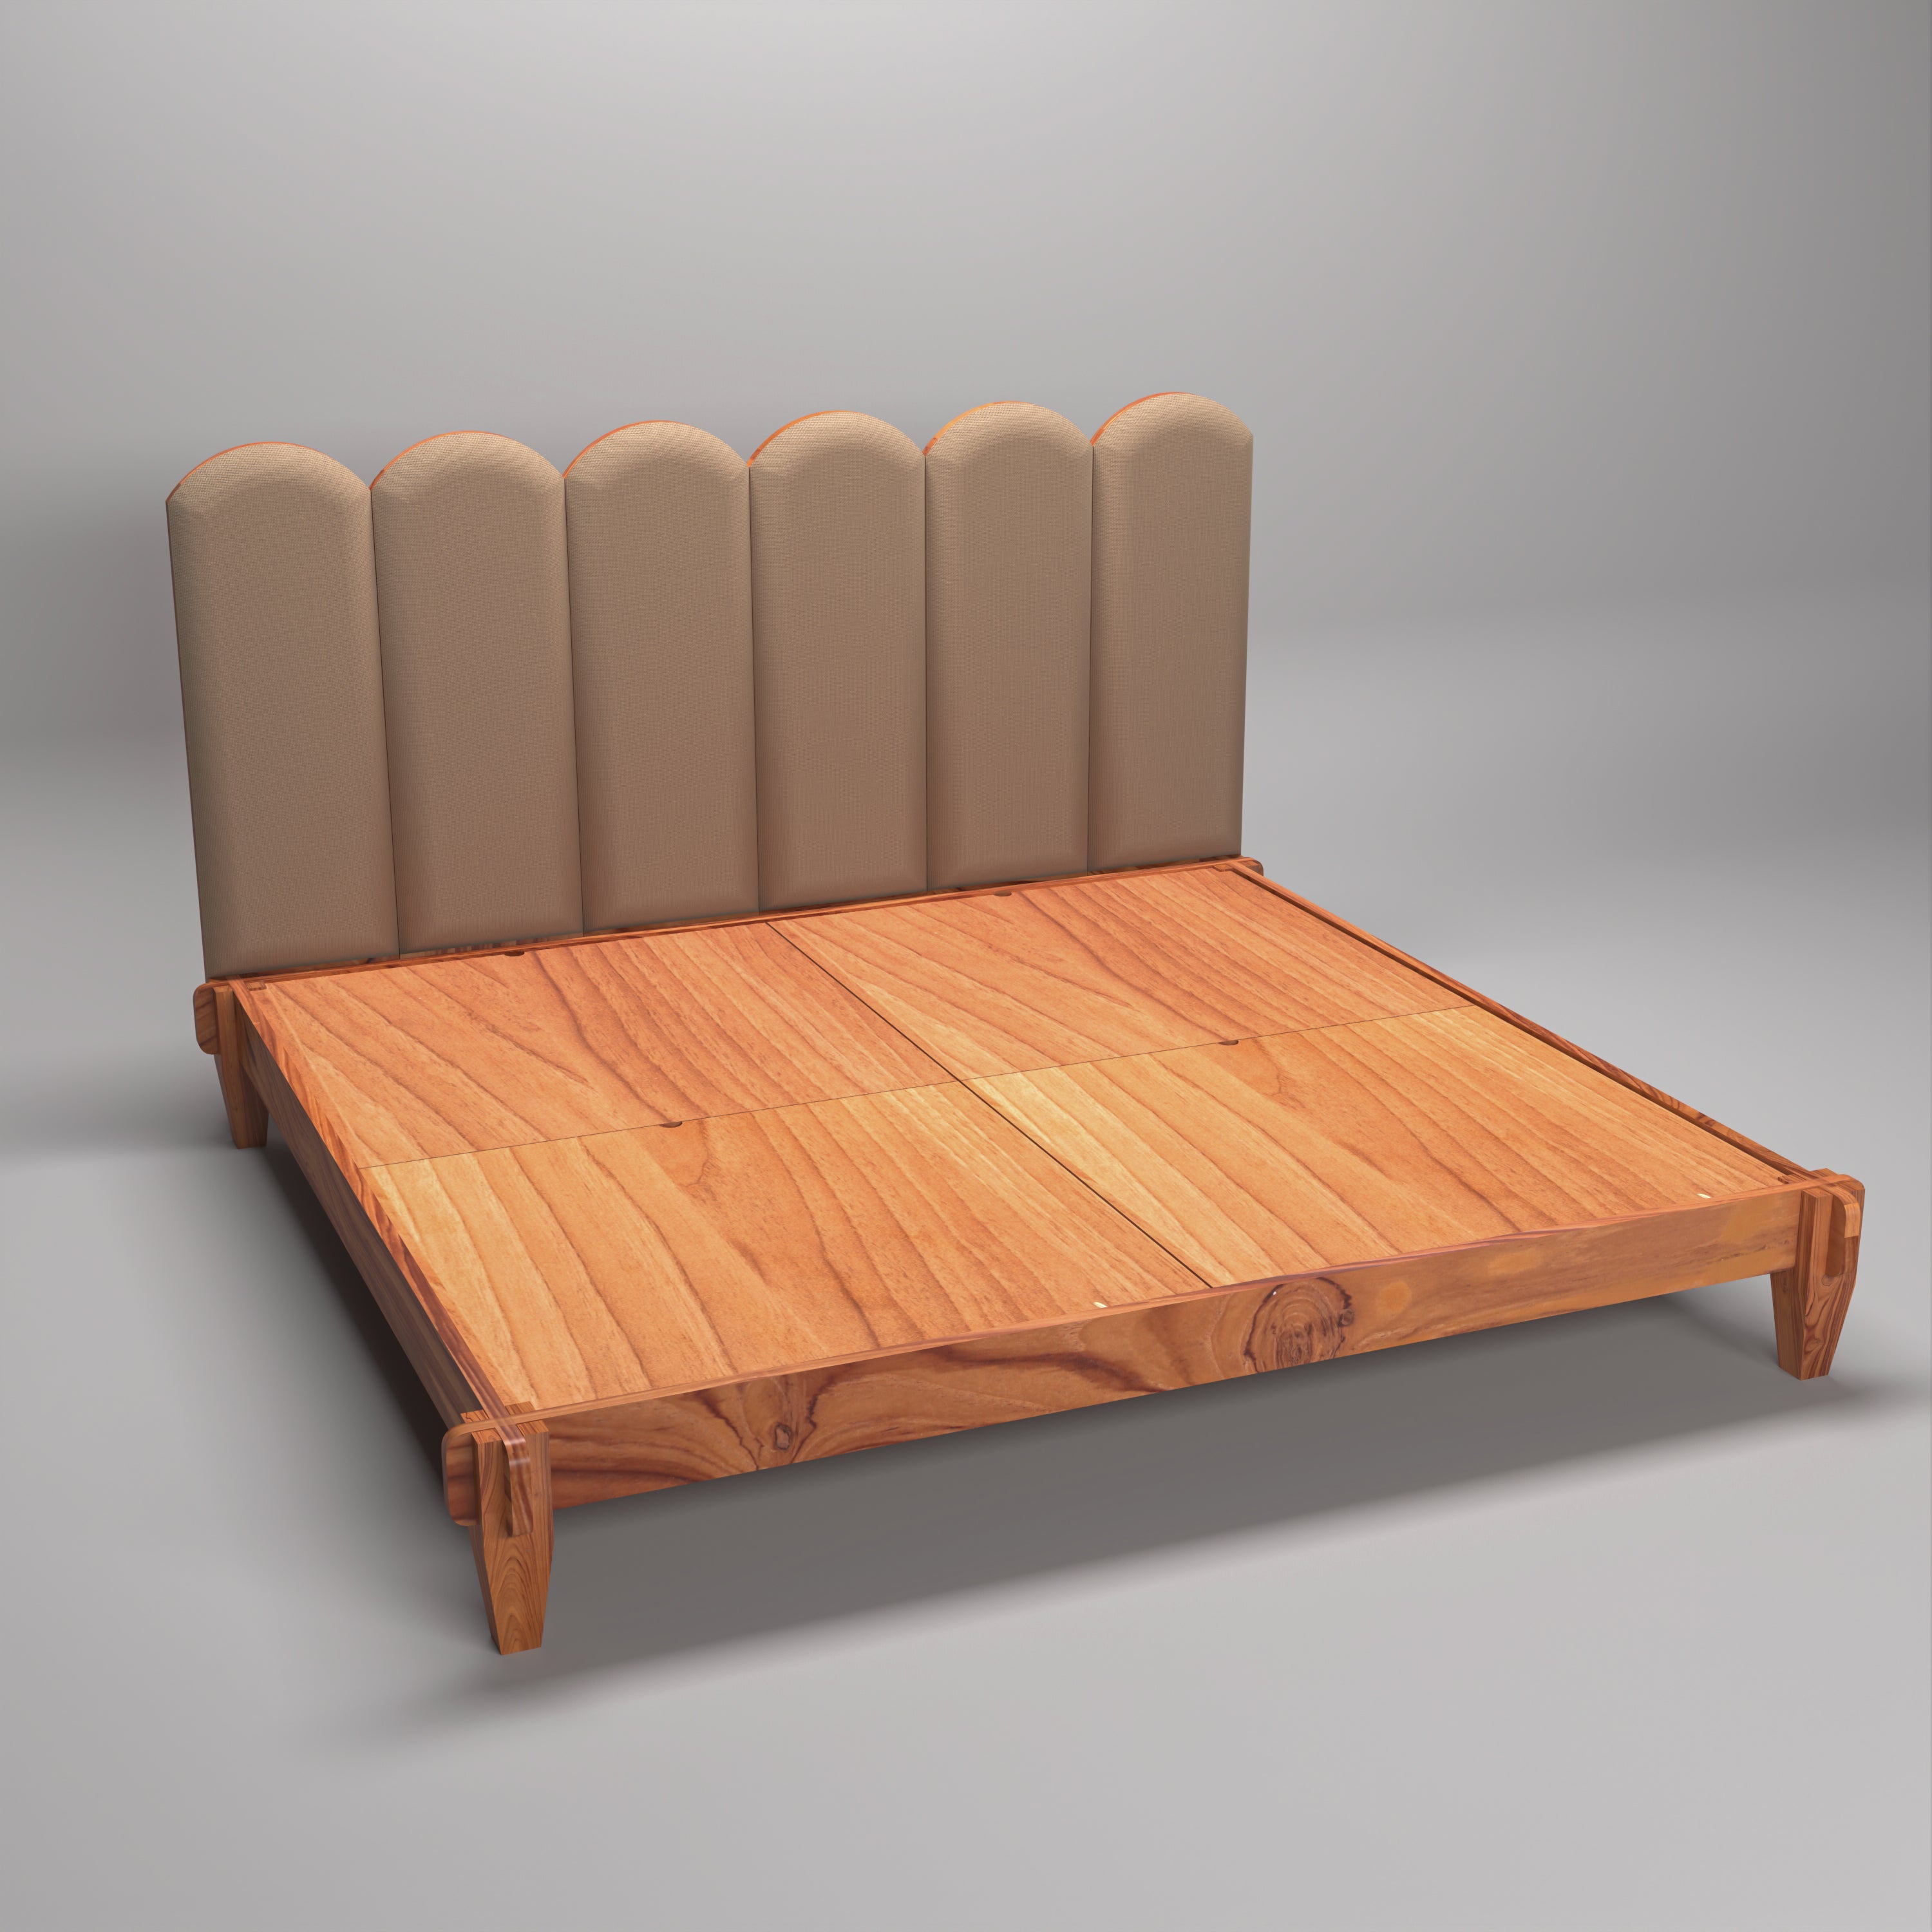 Solid Teak upholstered Headboard Classic Design Bed Bed